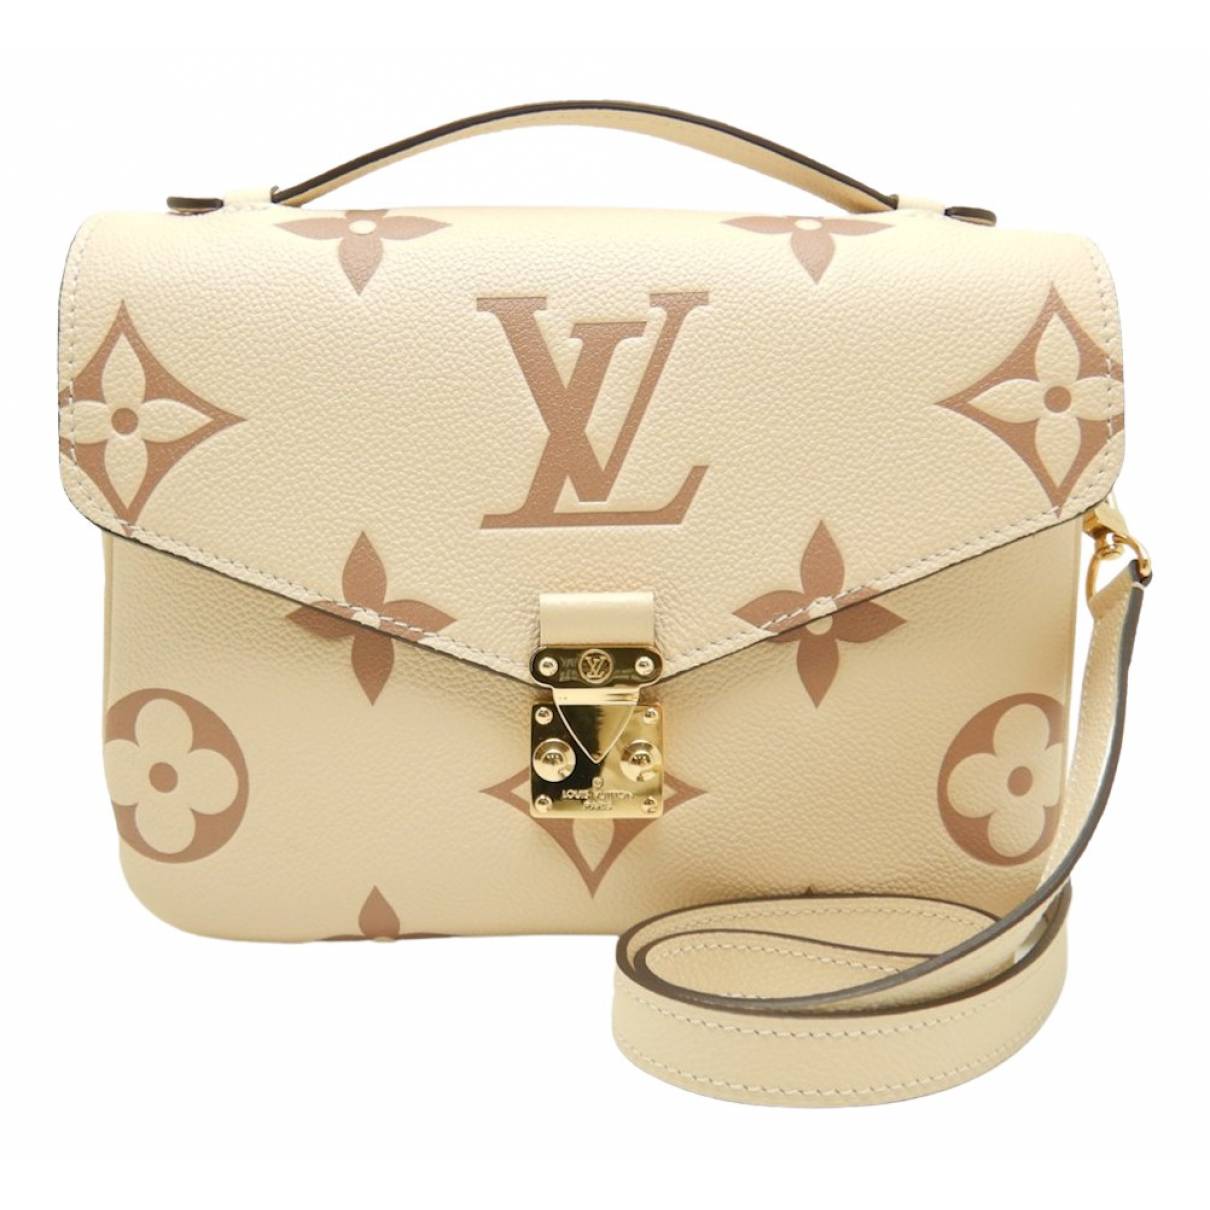 Louis Vuitton - Authenticated Handbag - Leather White Plain for Women, Good Condition